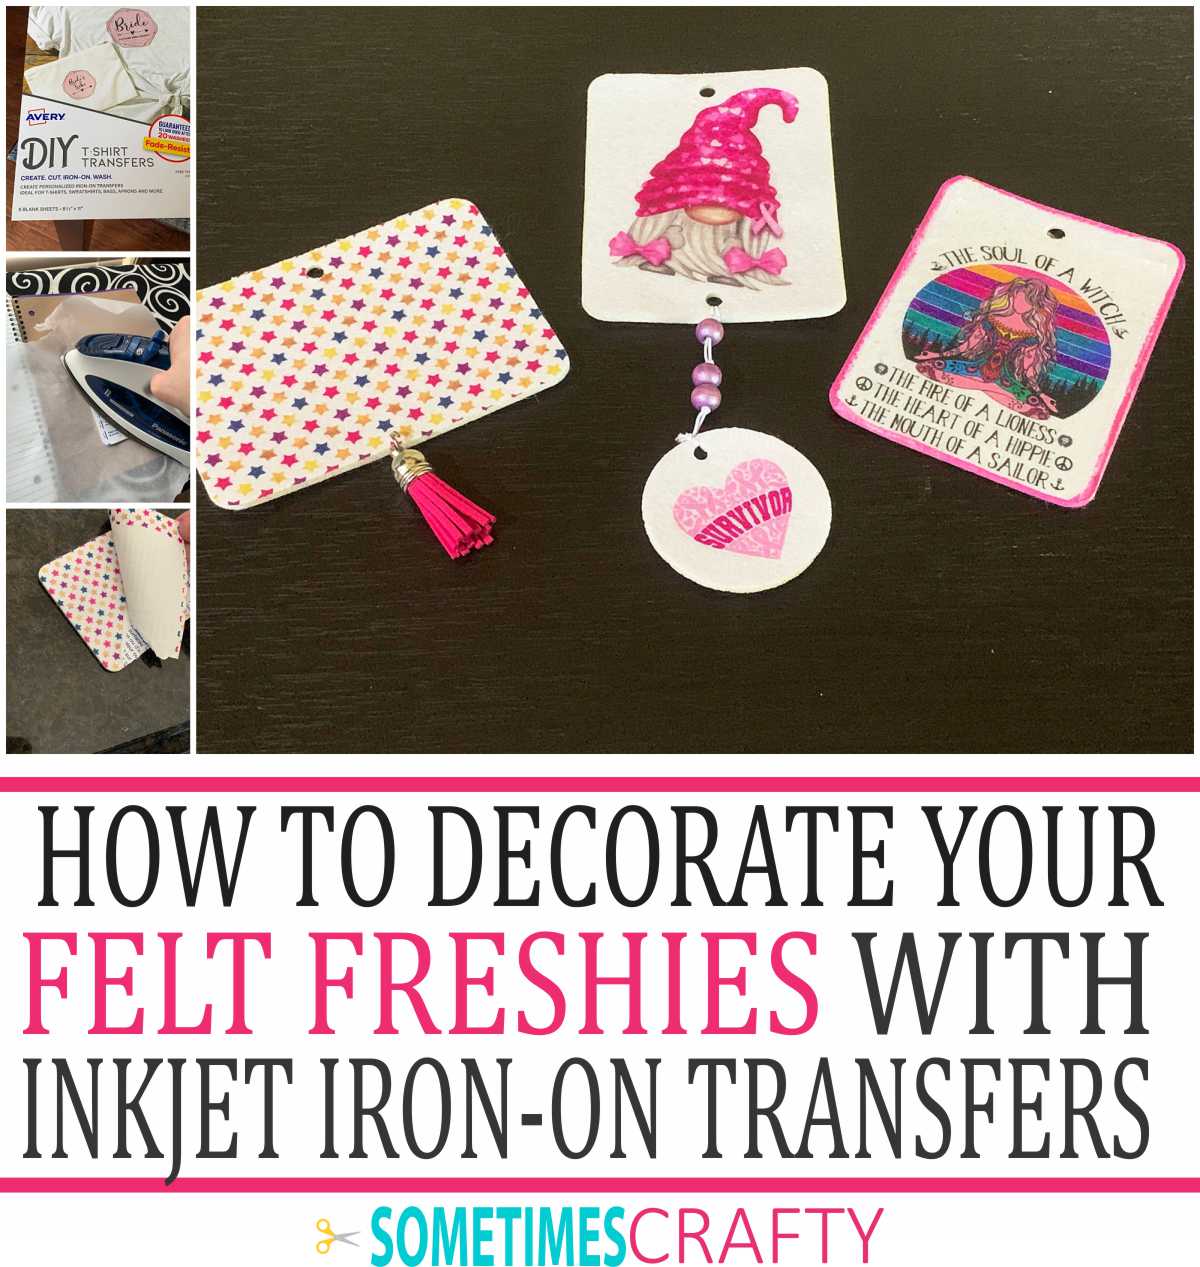 How to Decorate Felt Air Freshener with Avery Inkjet Iron on